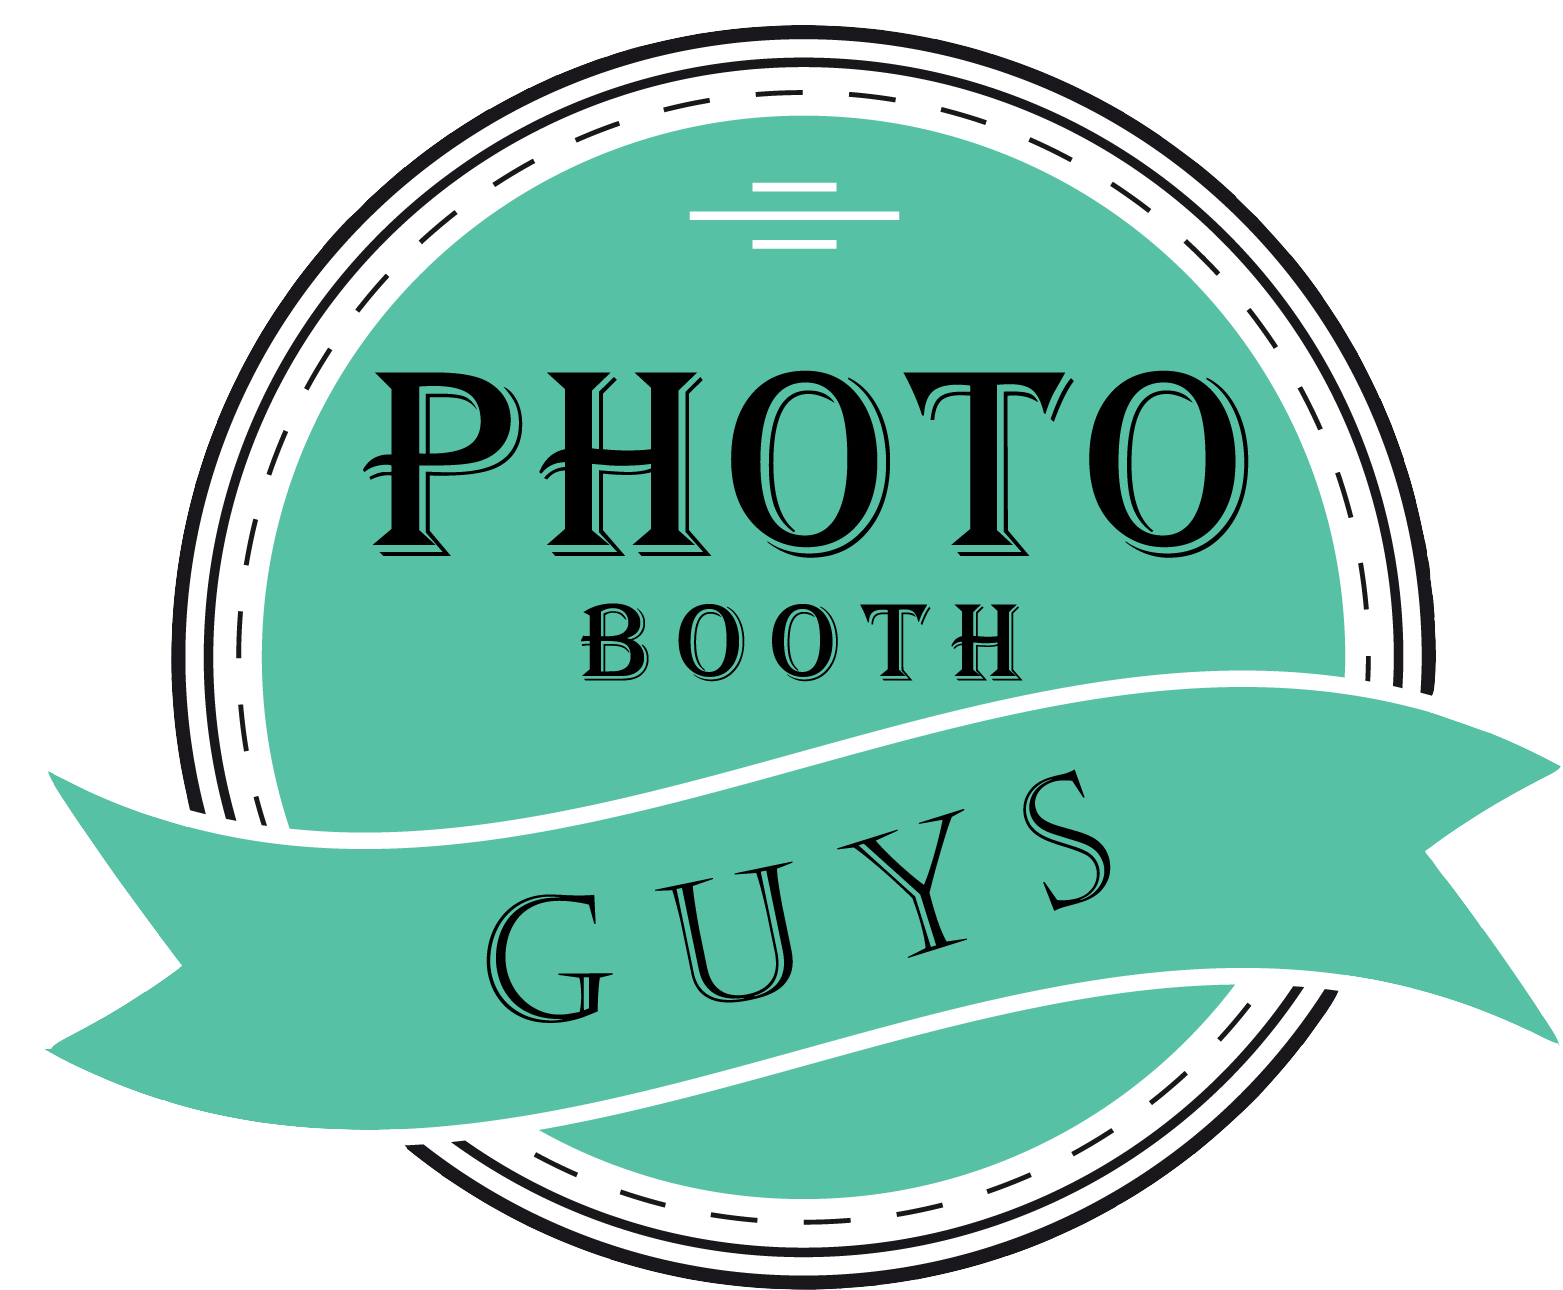 Photobooth Guys Logo PNG